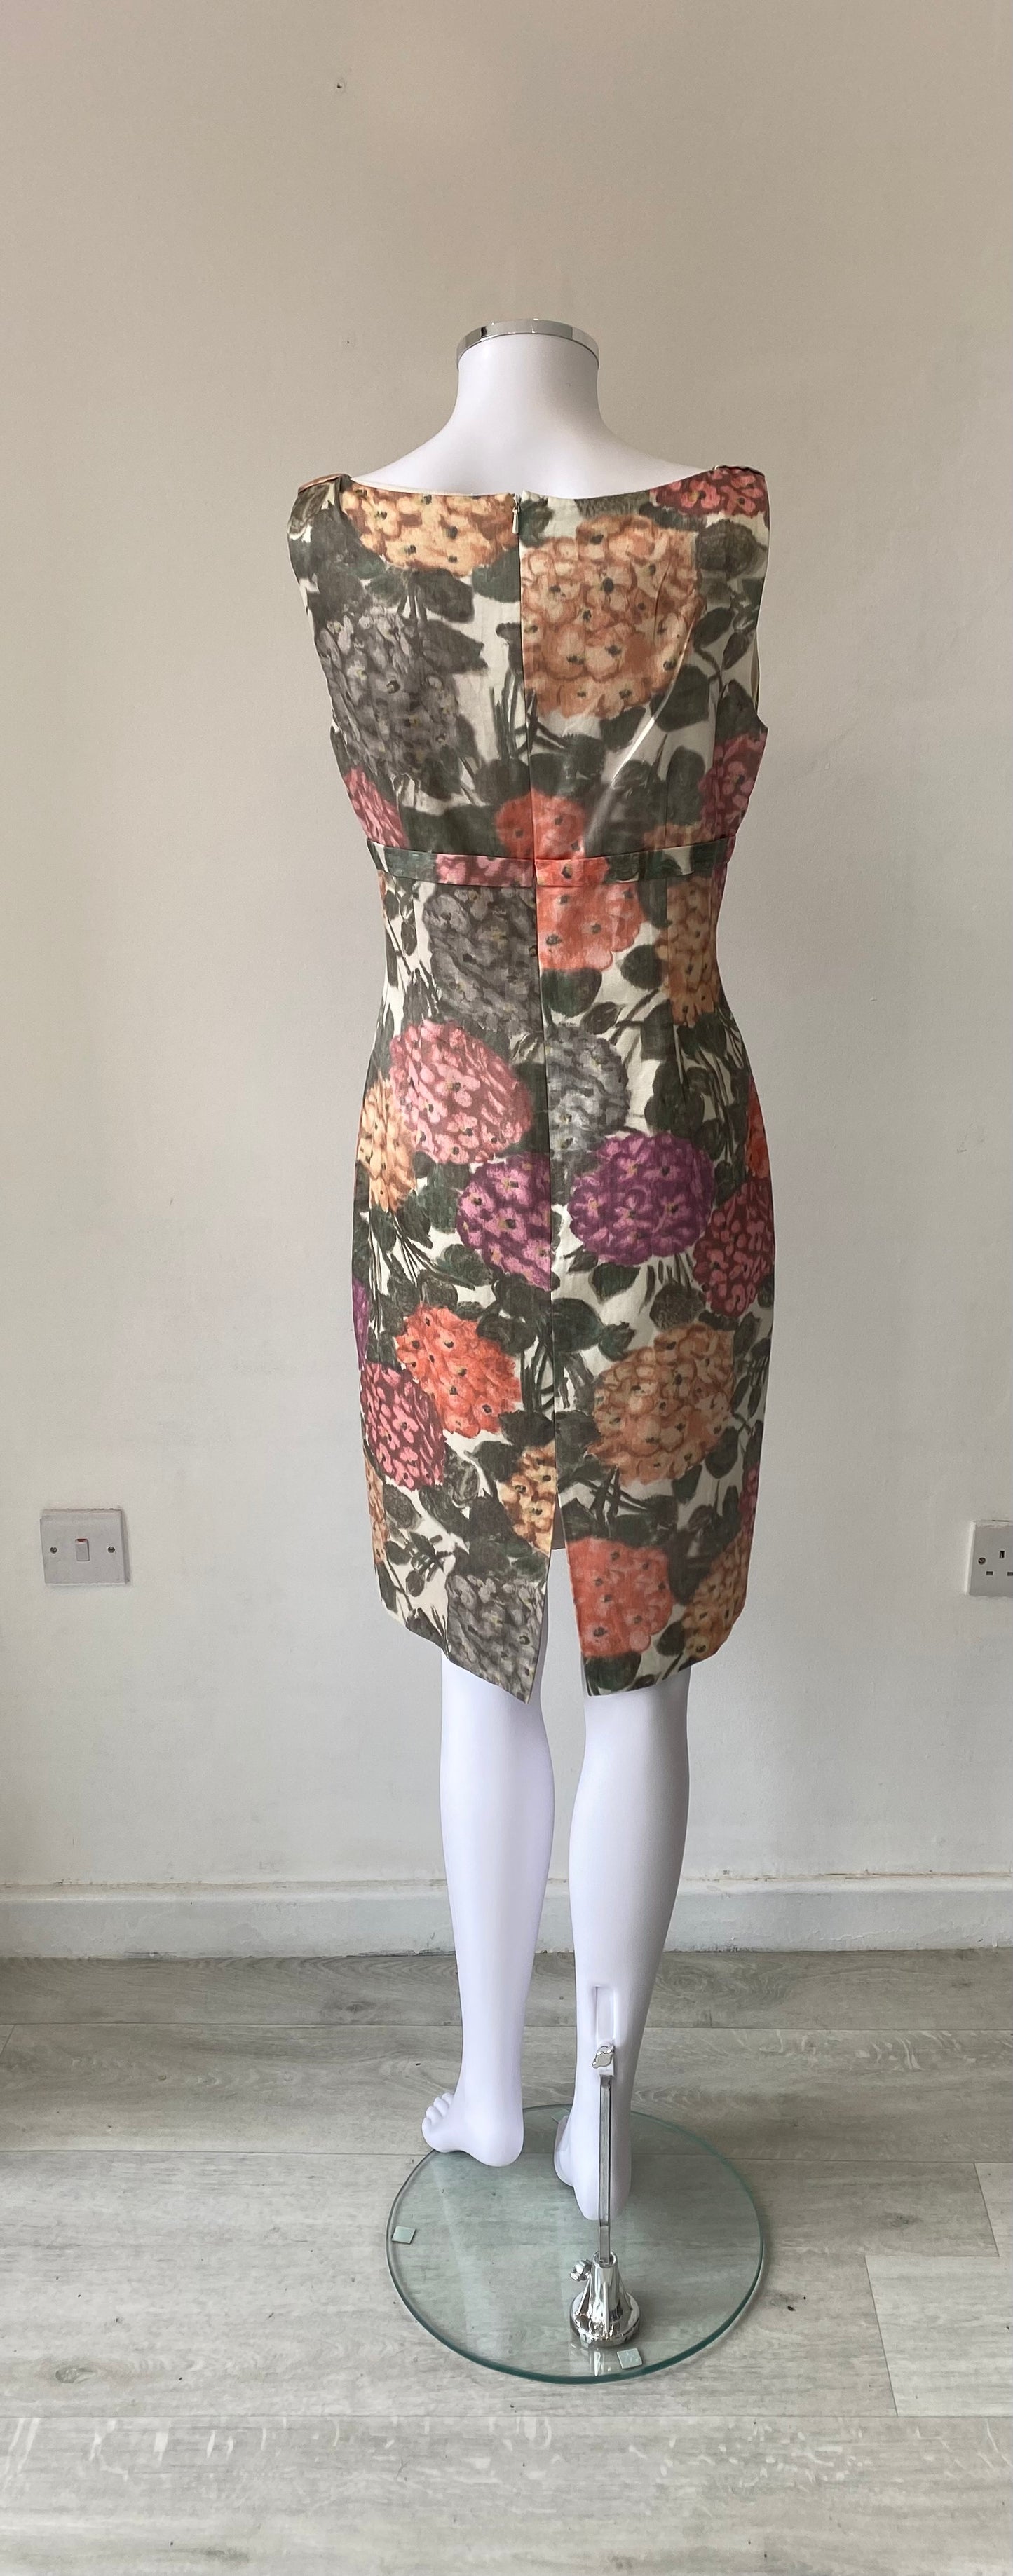 Hobbs Real Silk Floral Print Dress Size 10